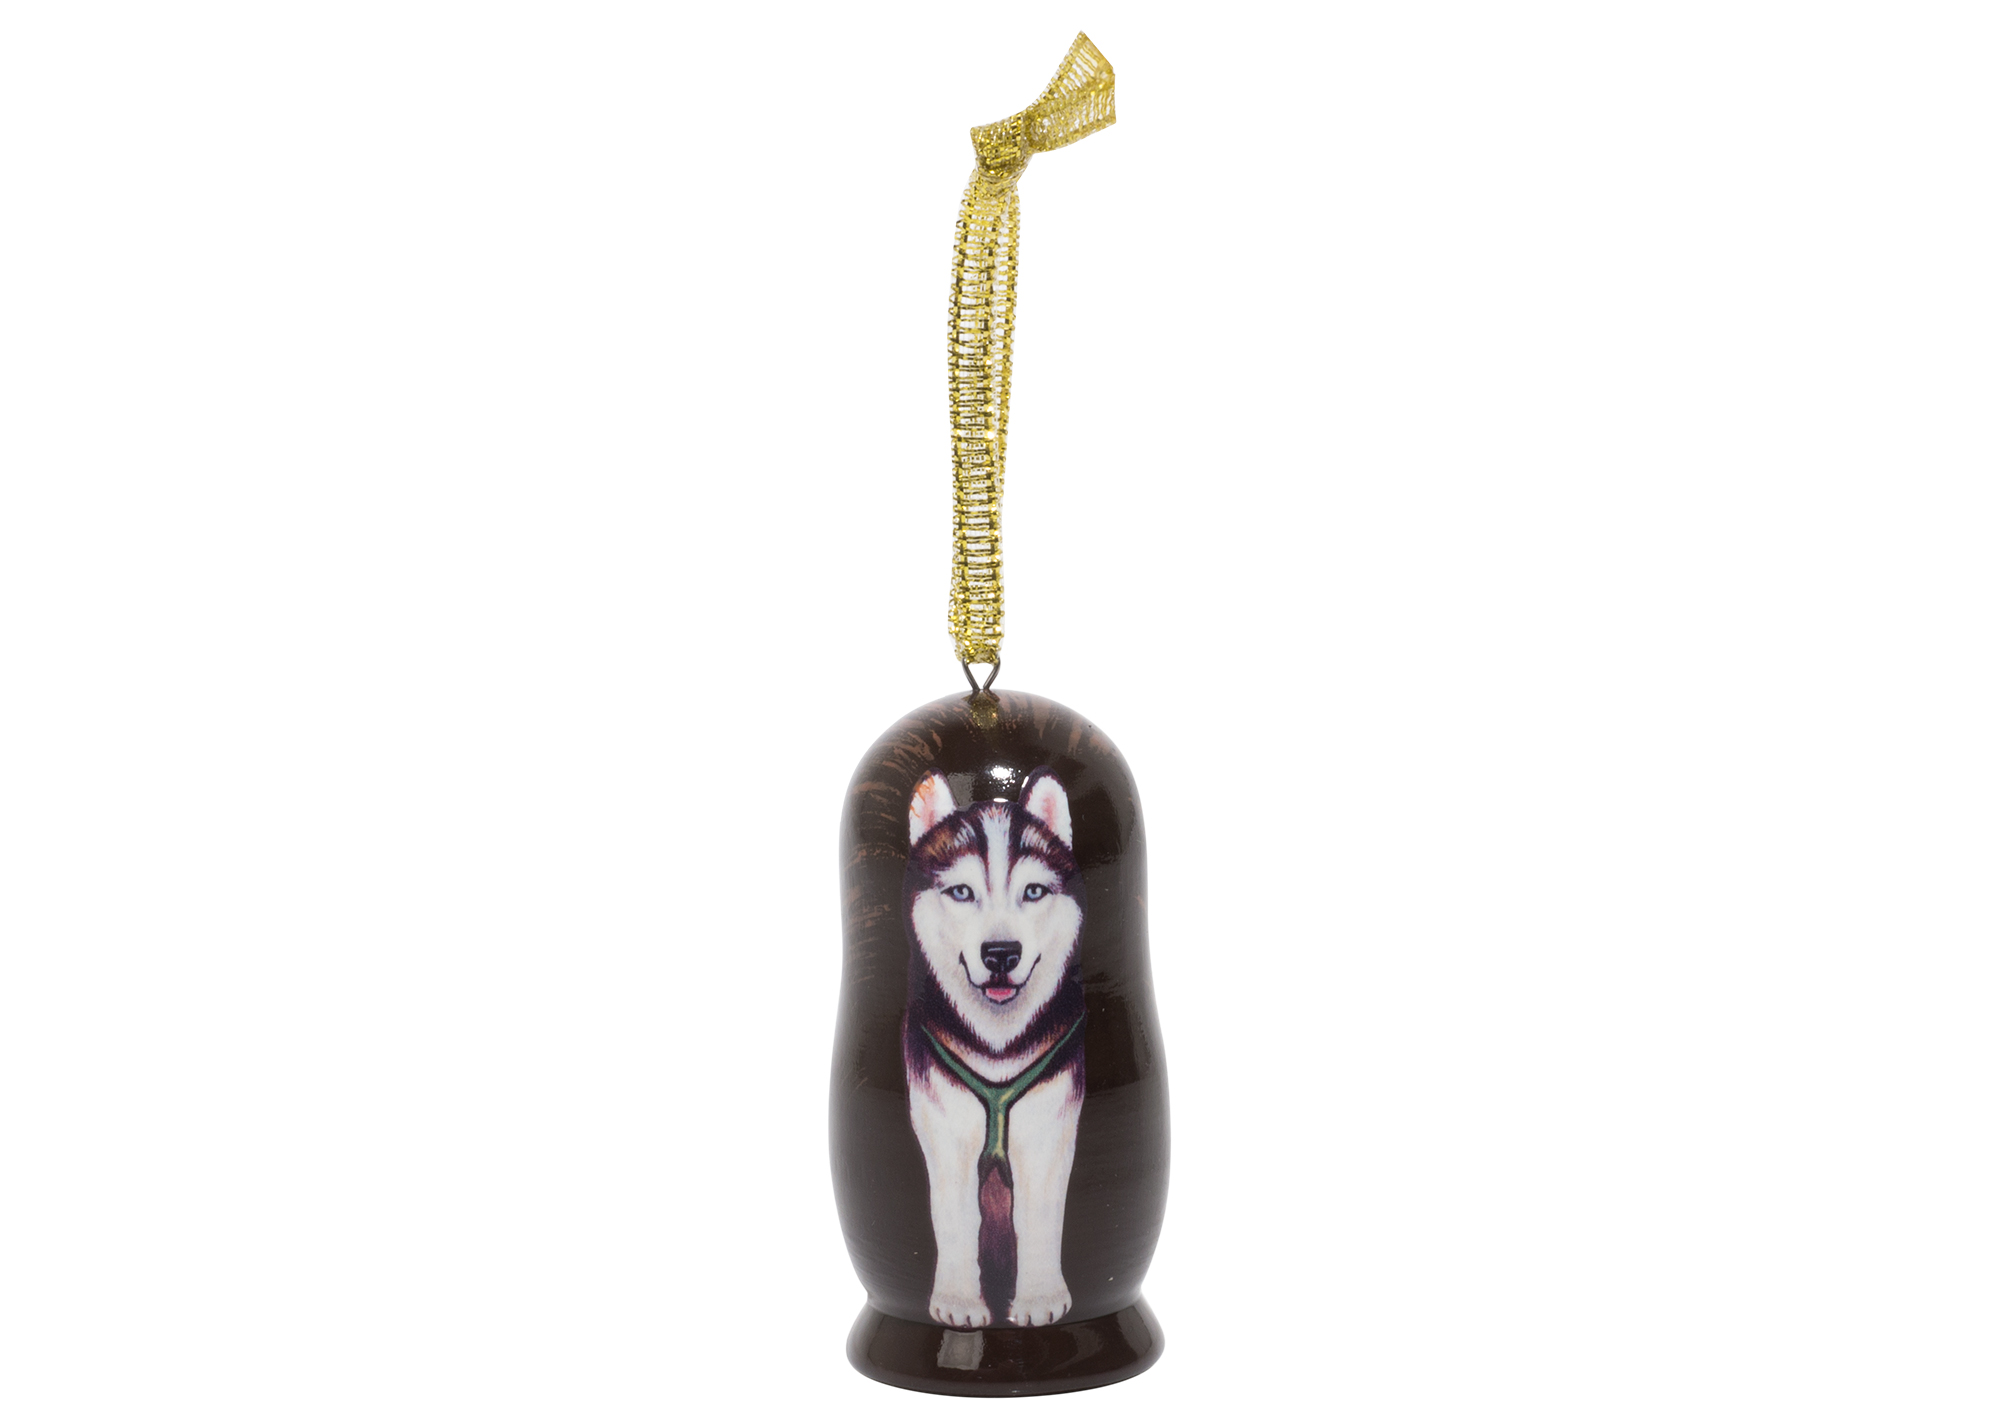 Buy Husky Dog Ornament 2" at GoldenCockerel.com